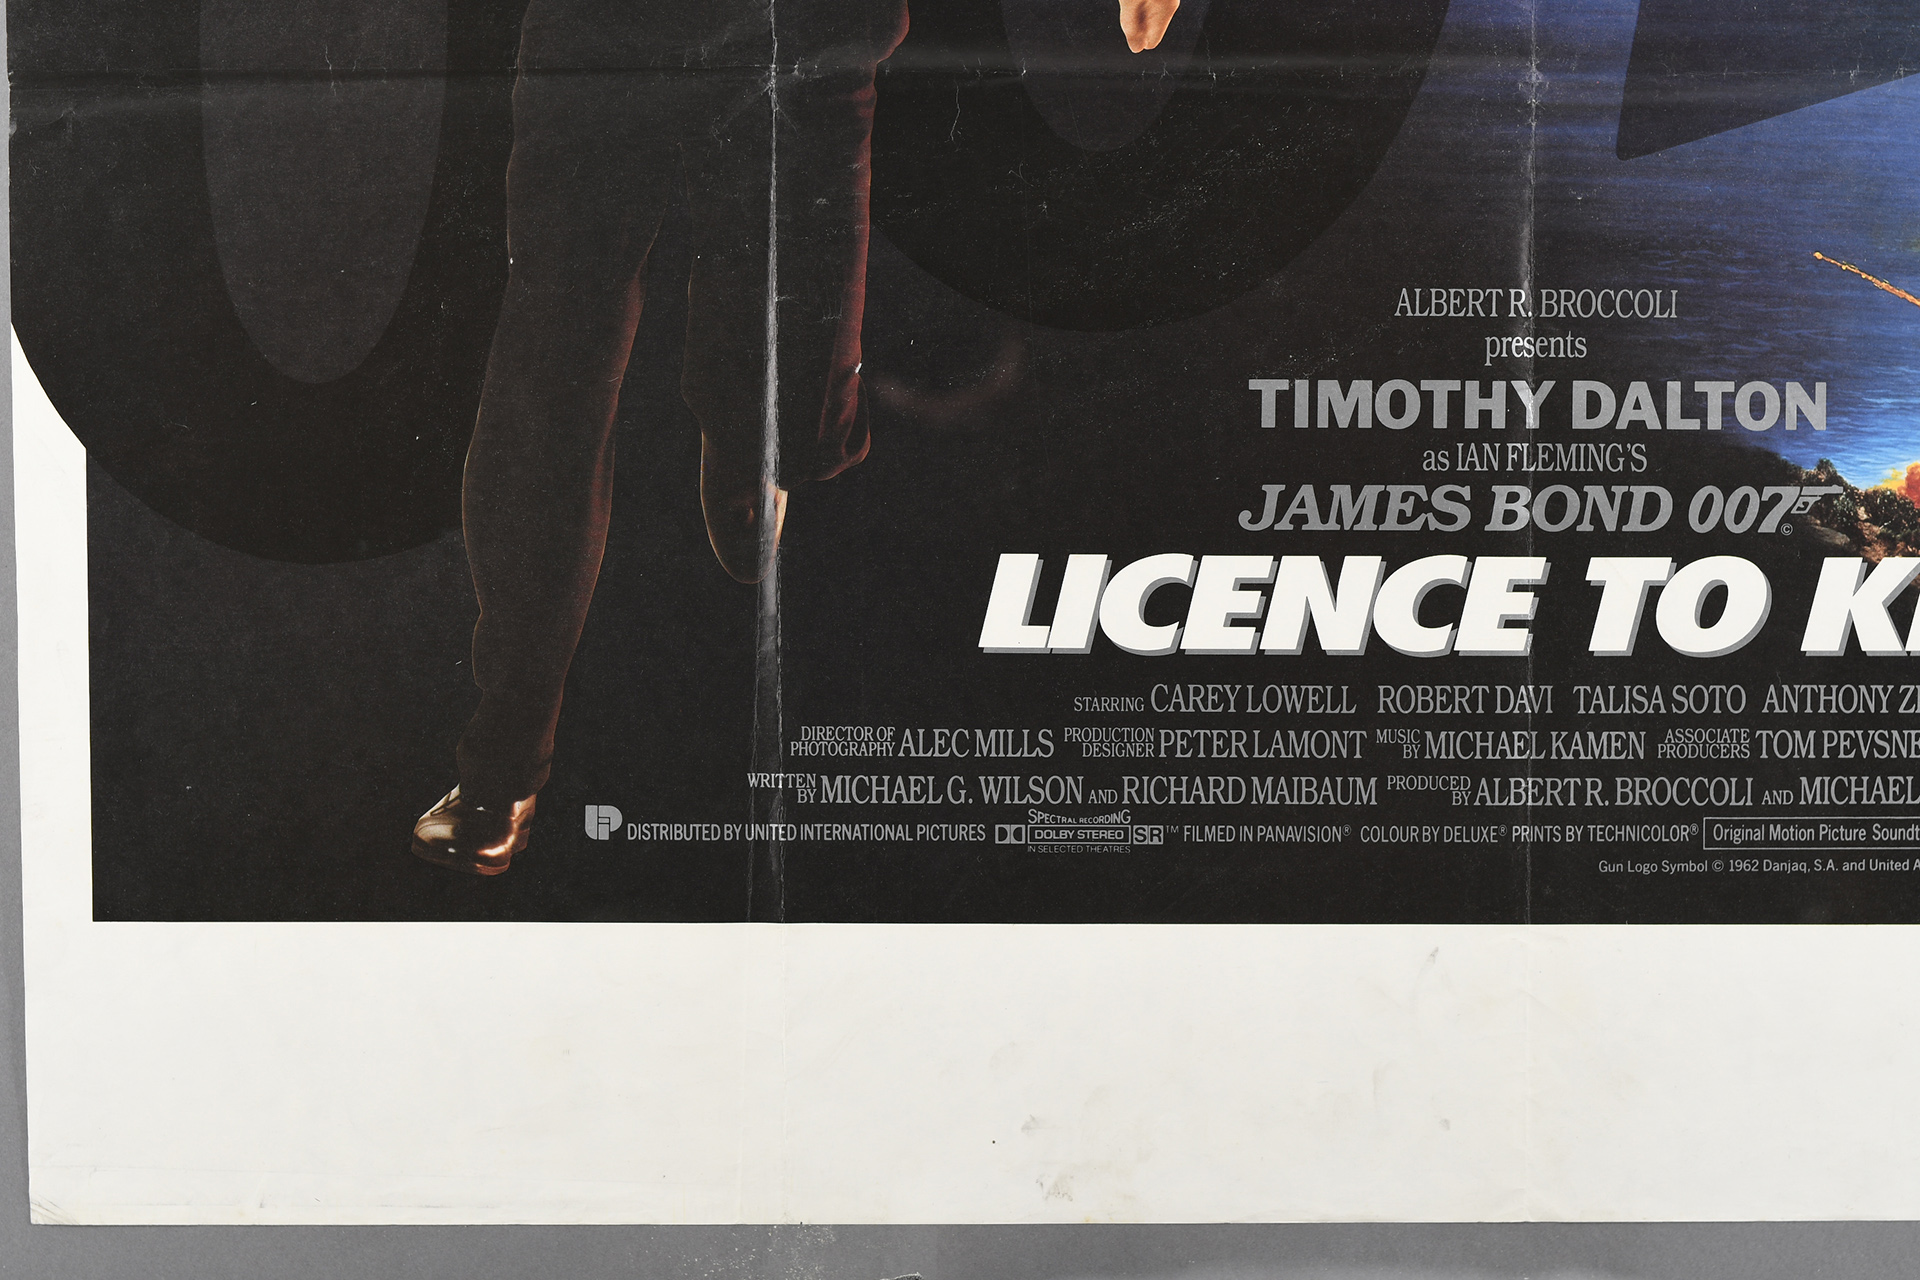 Original "Licence to Kill" Cinema Poster